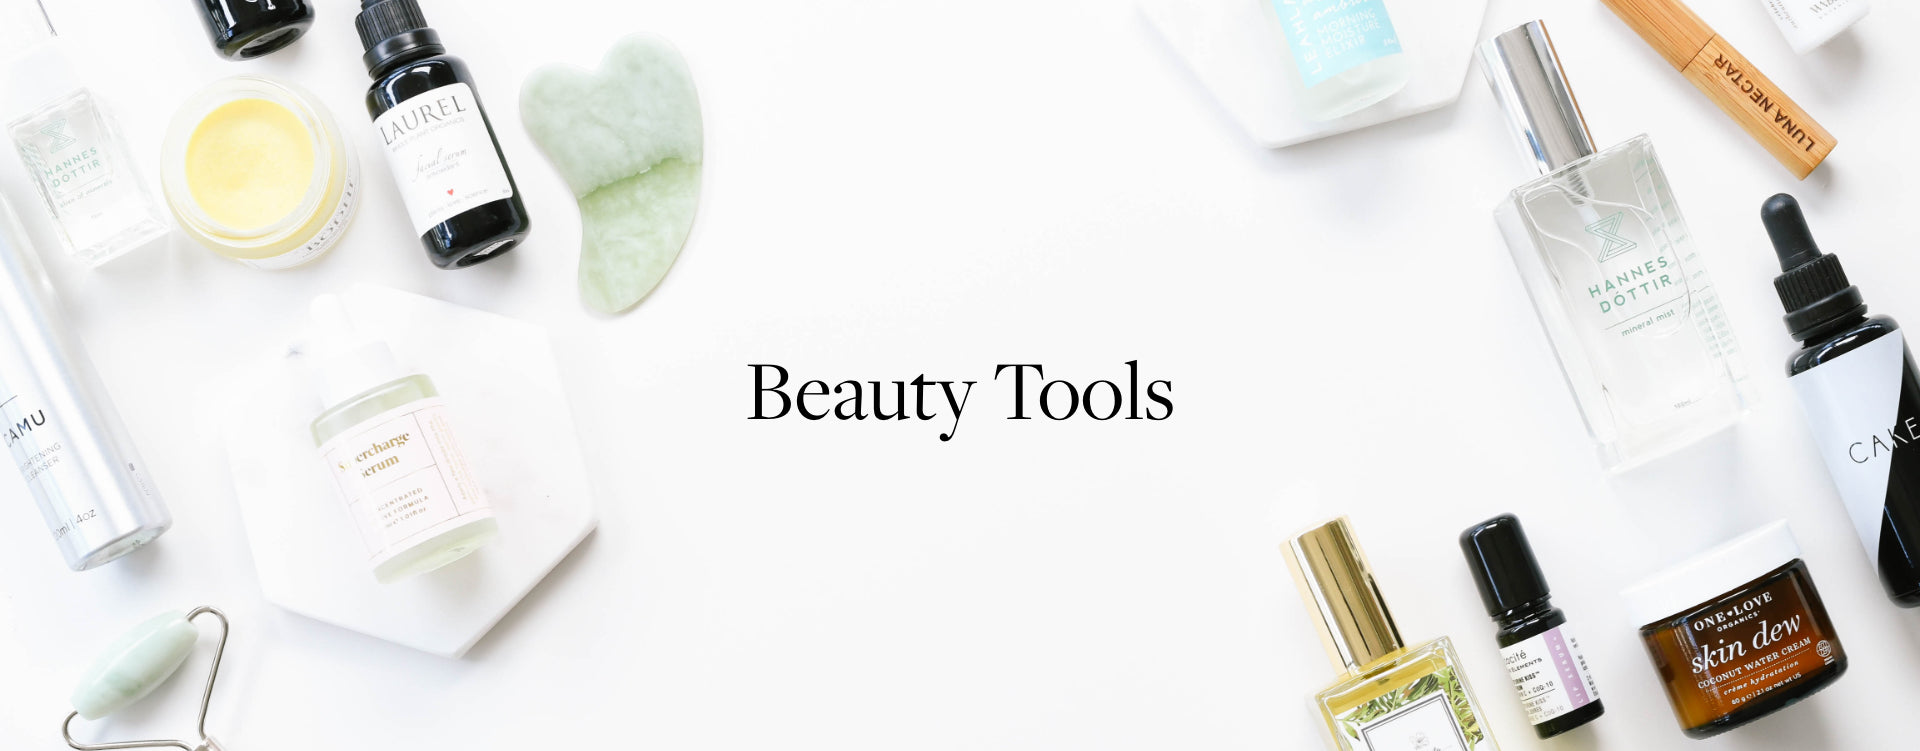 All Beauty Tools